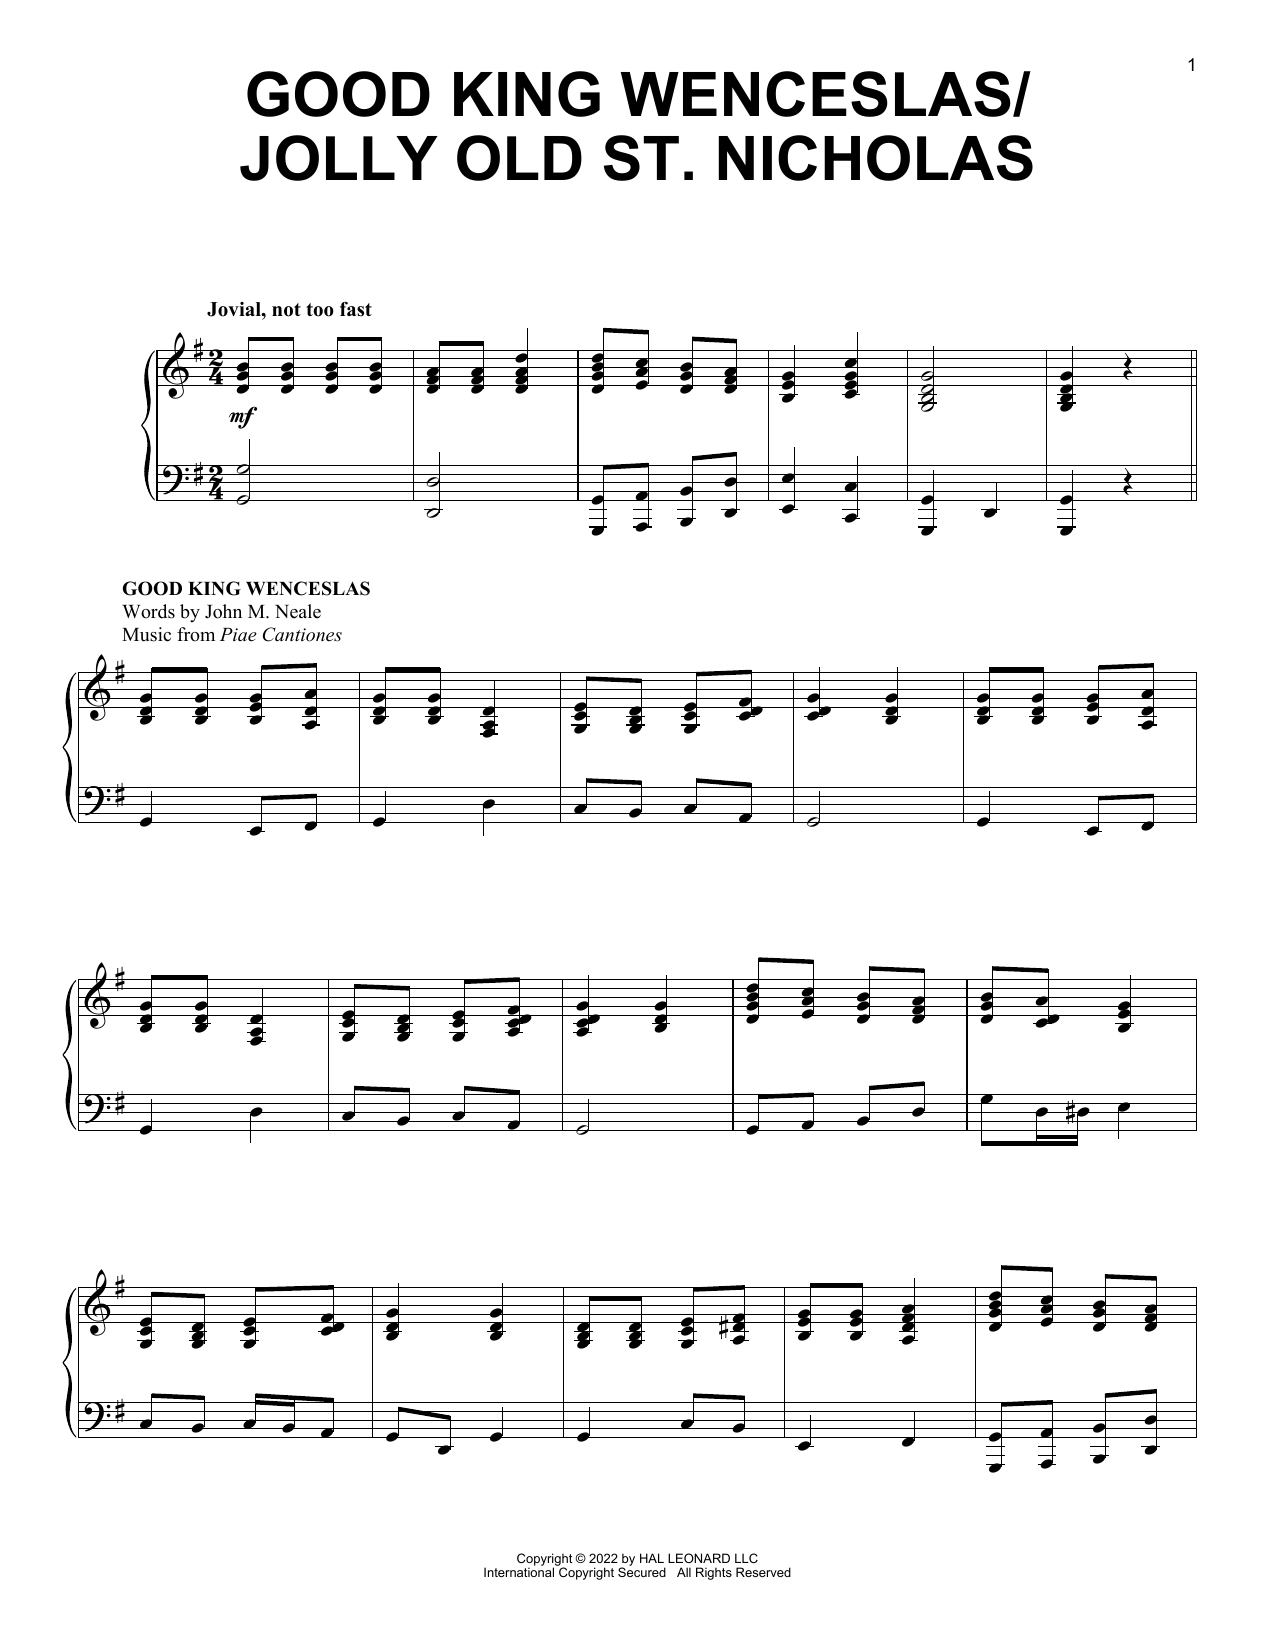 Various Good King Wenceslas/Jolly Old Saint Nicholas Sheet Music Notes & Chords for Piano Solo - Download or Print PDF